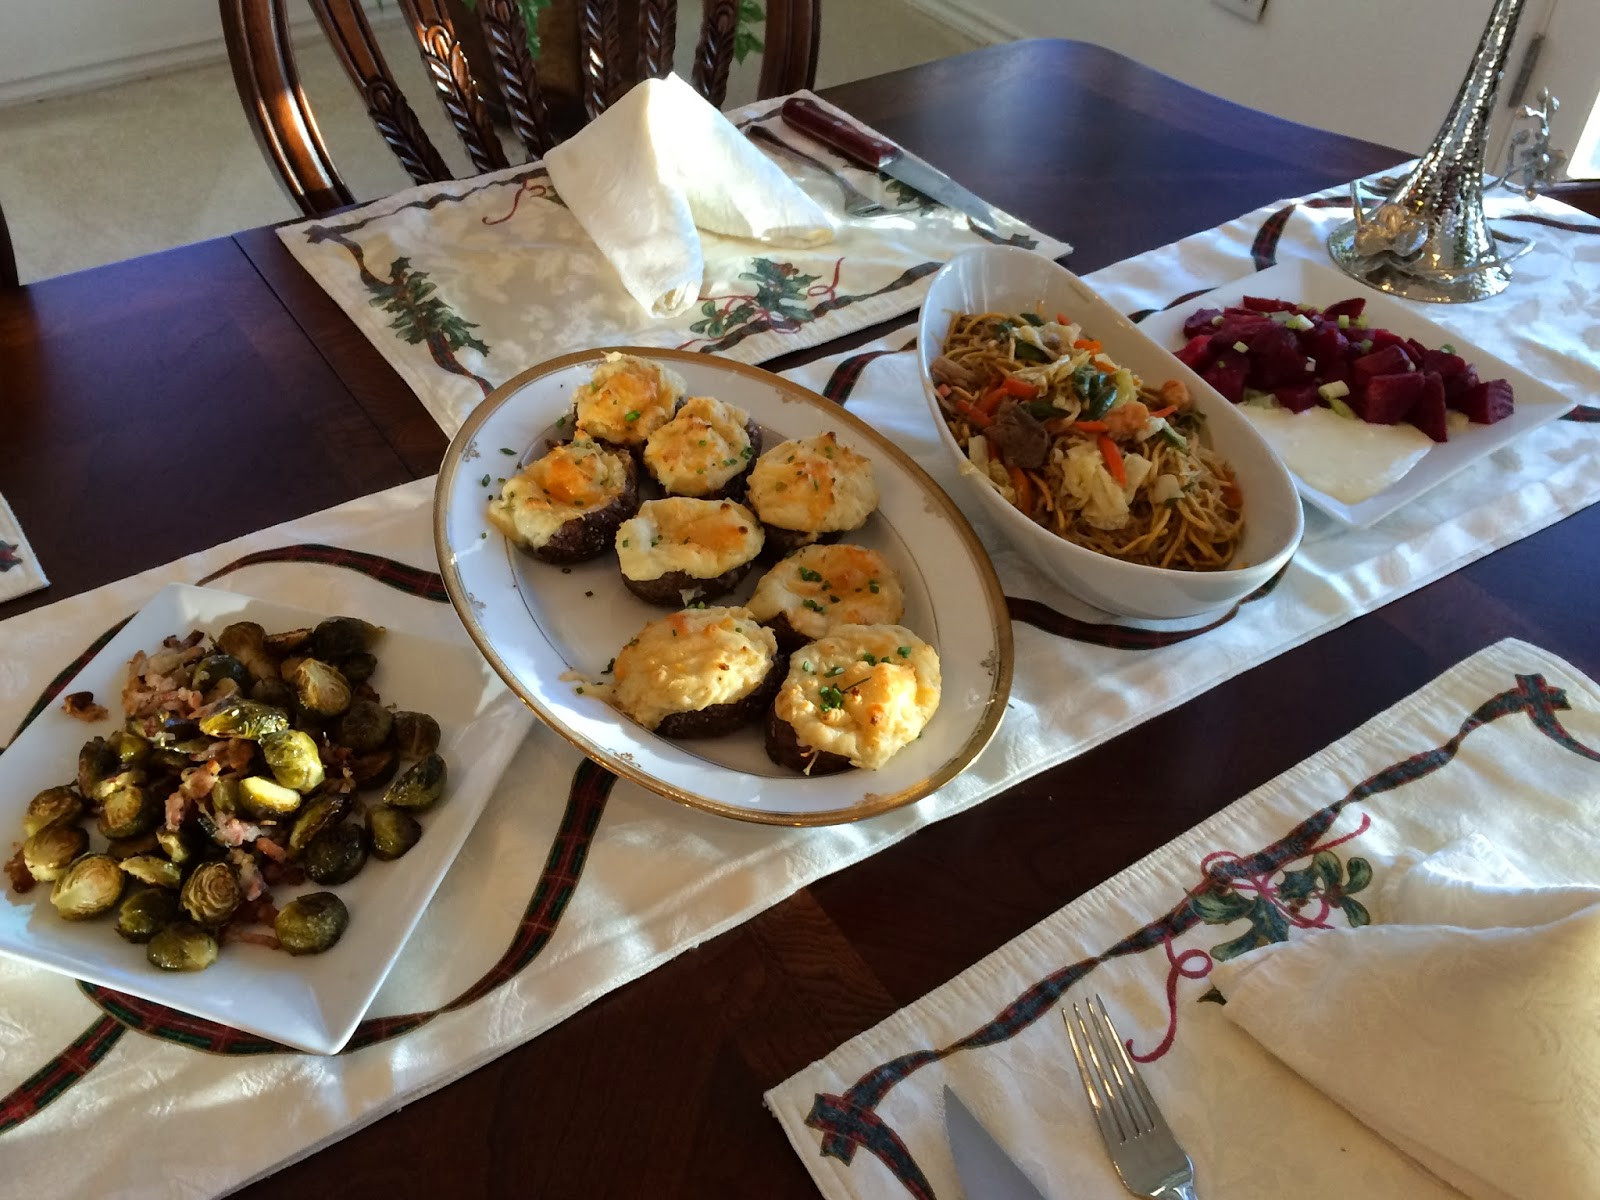 Prime Rib Sides For Christmas Dinner
 TASTE OF HAWAII CHRISTMAS PRIME RIB DINNER AT HOME